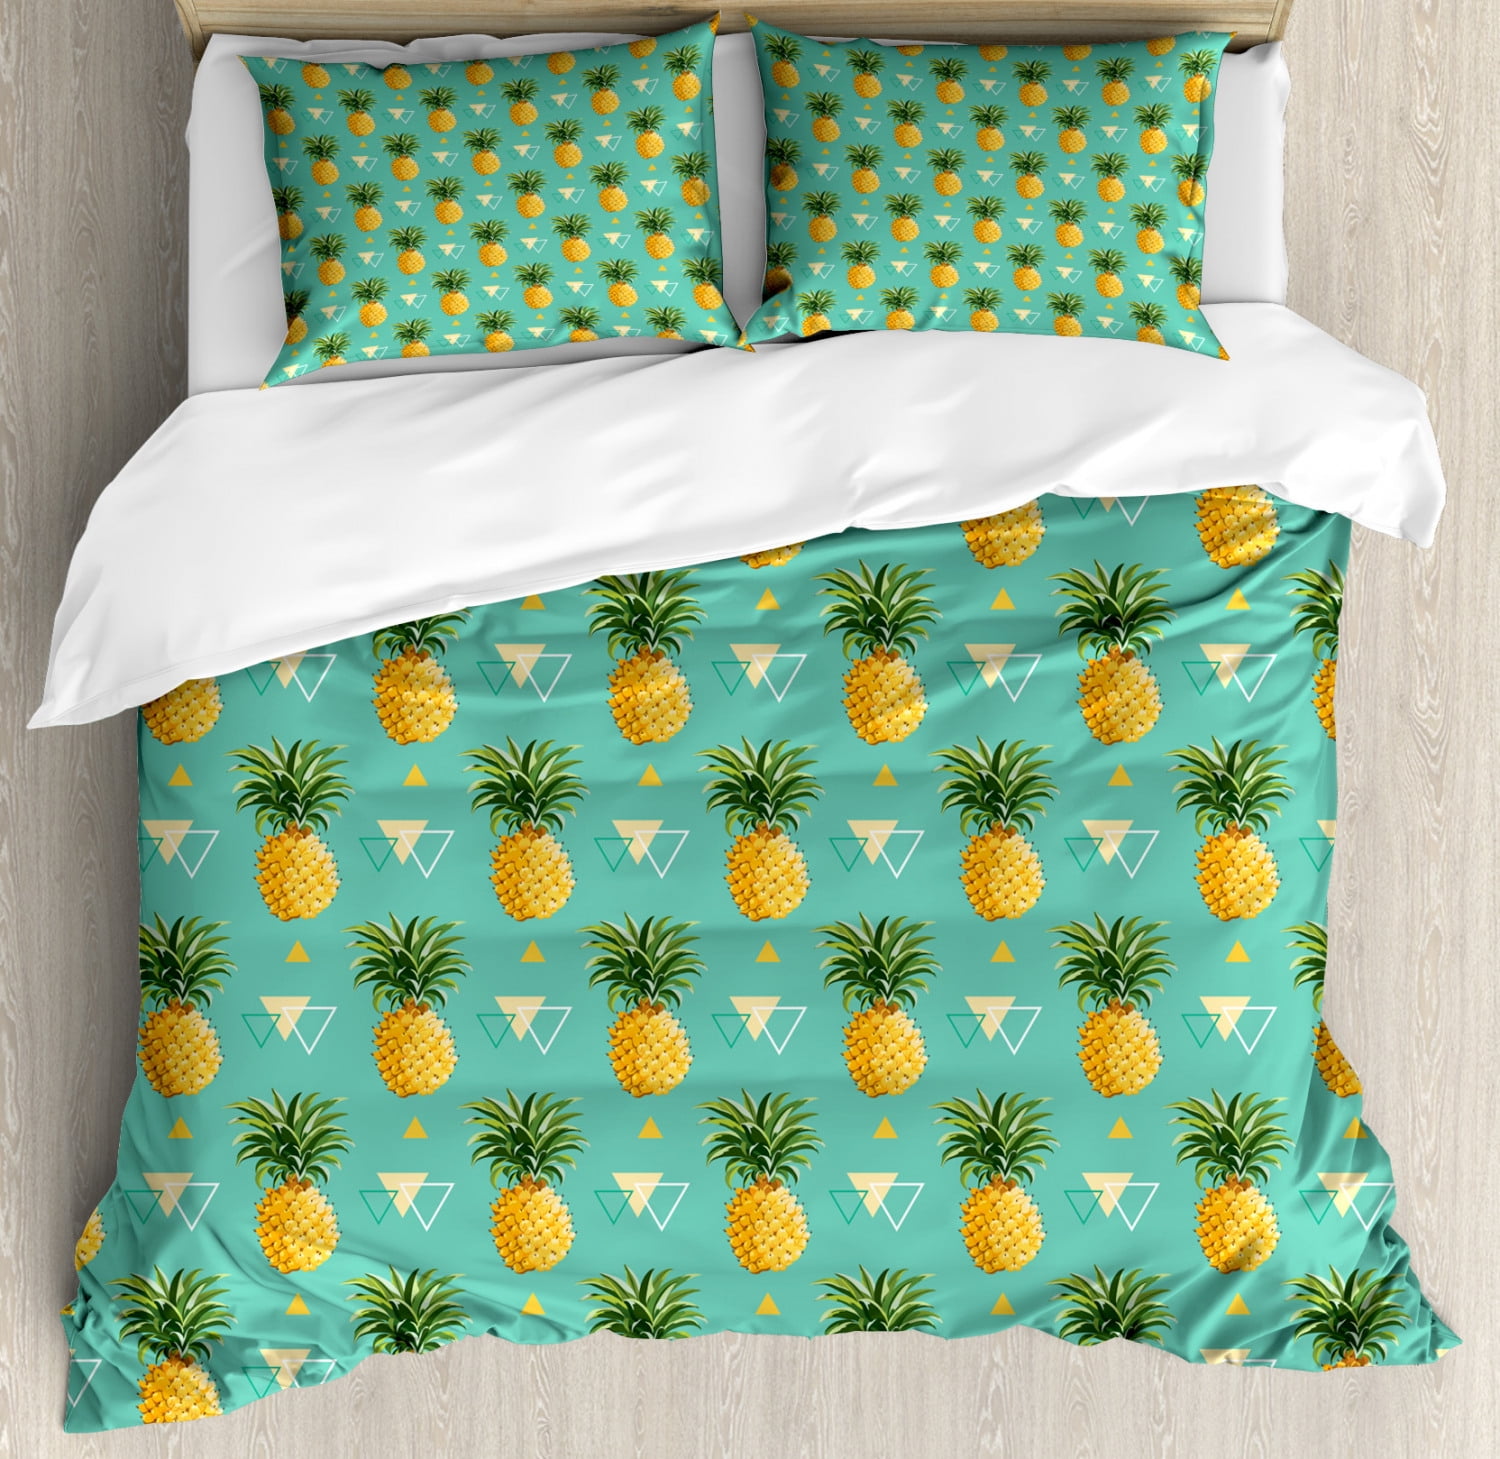 Hawaii Pineapple Bedding Set Duvet Cover Comforter Cover Pillowcase 